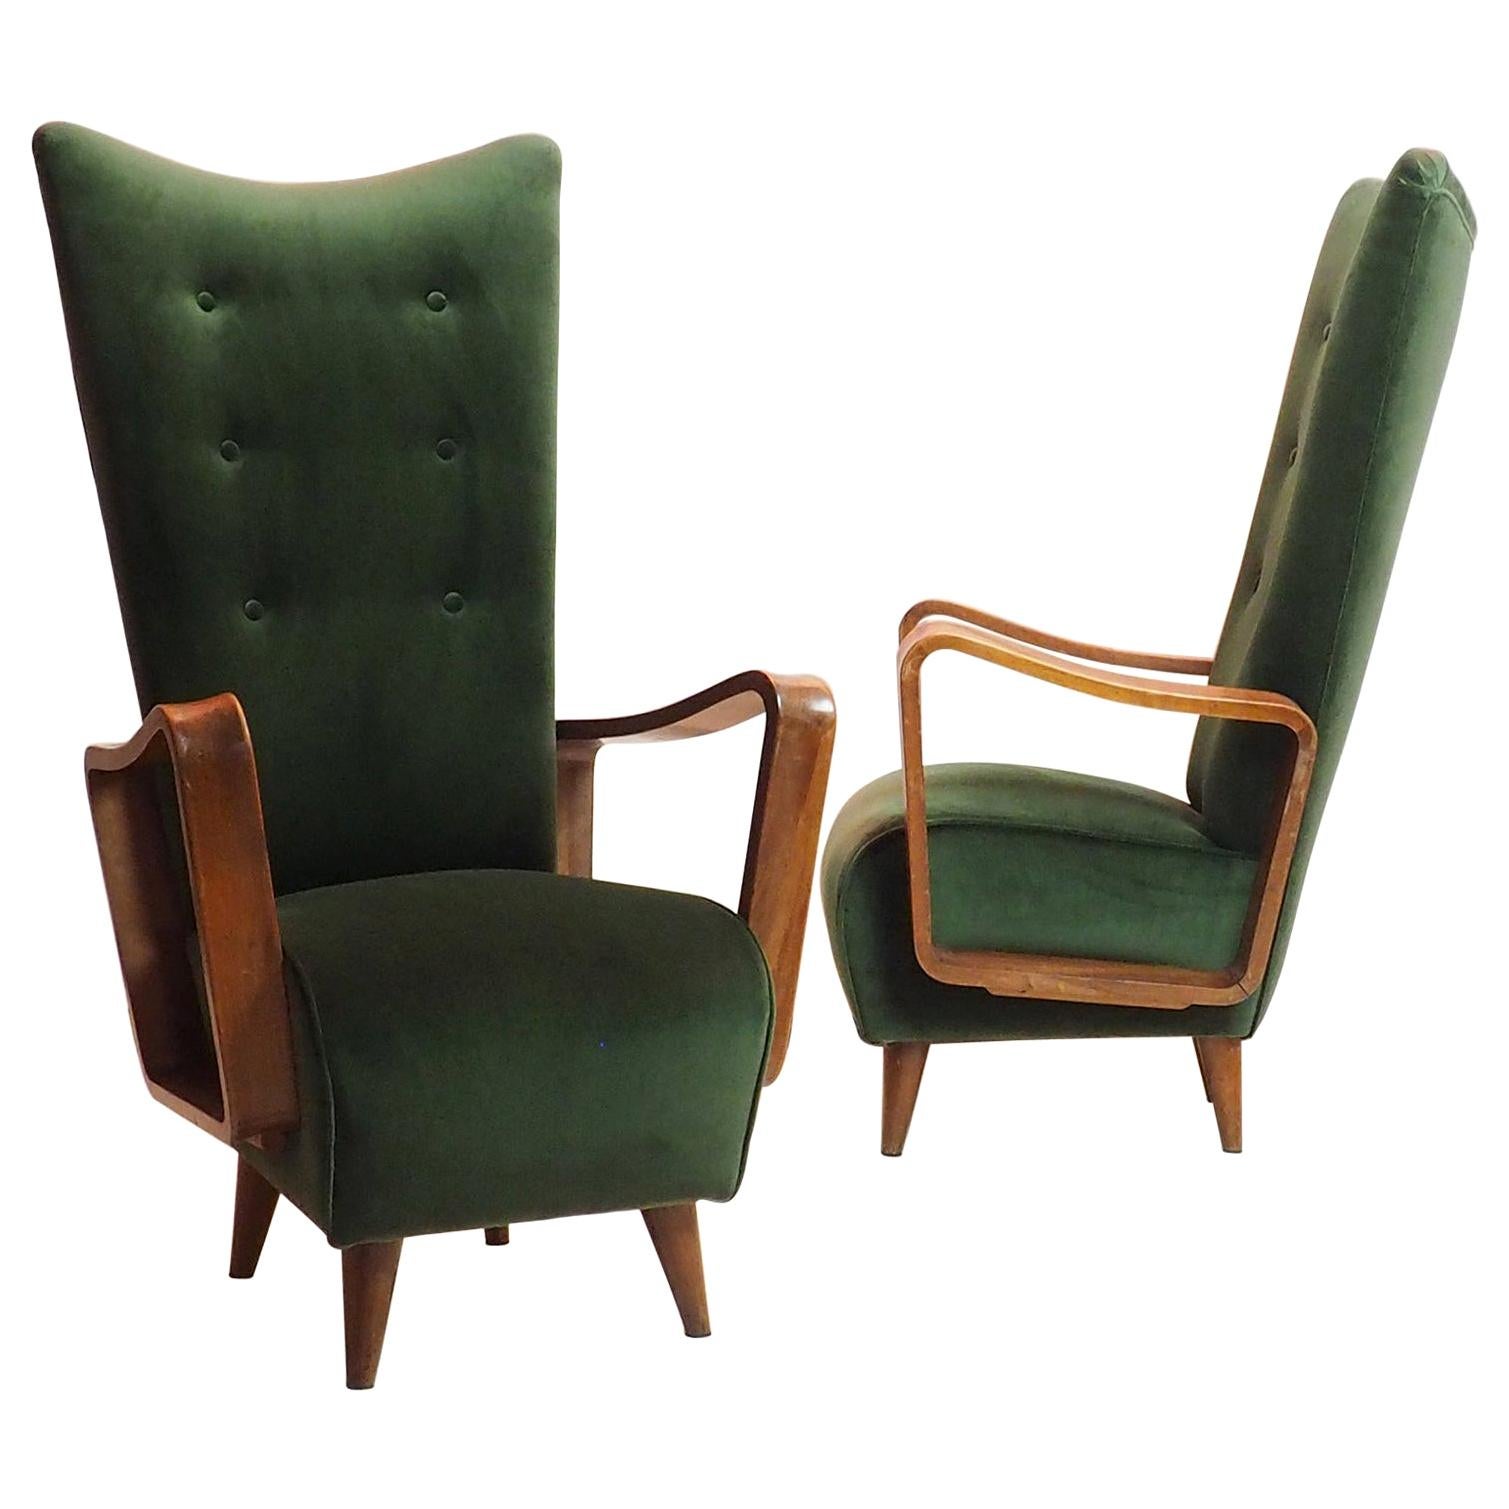 Midcentury High Back Italian Green Armchairs by Pietro Lingeri, Italy 1950s